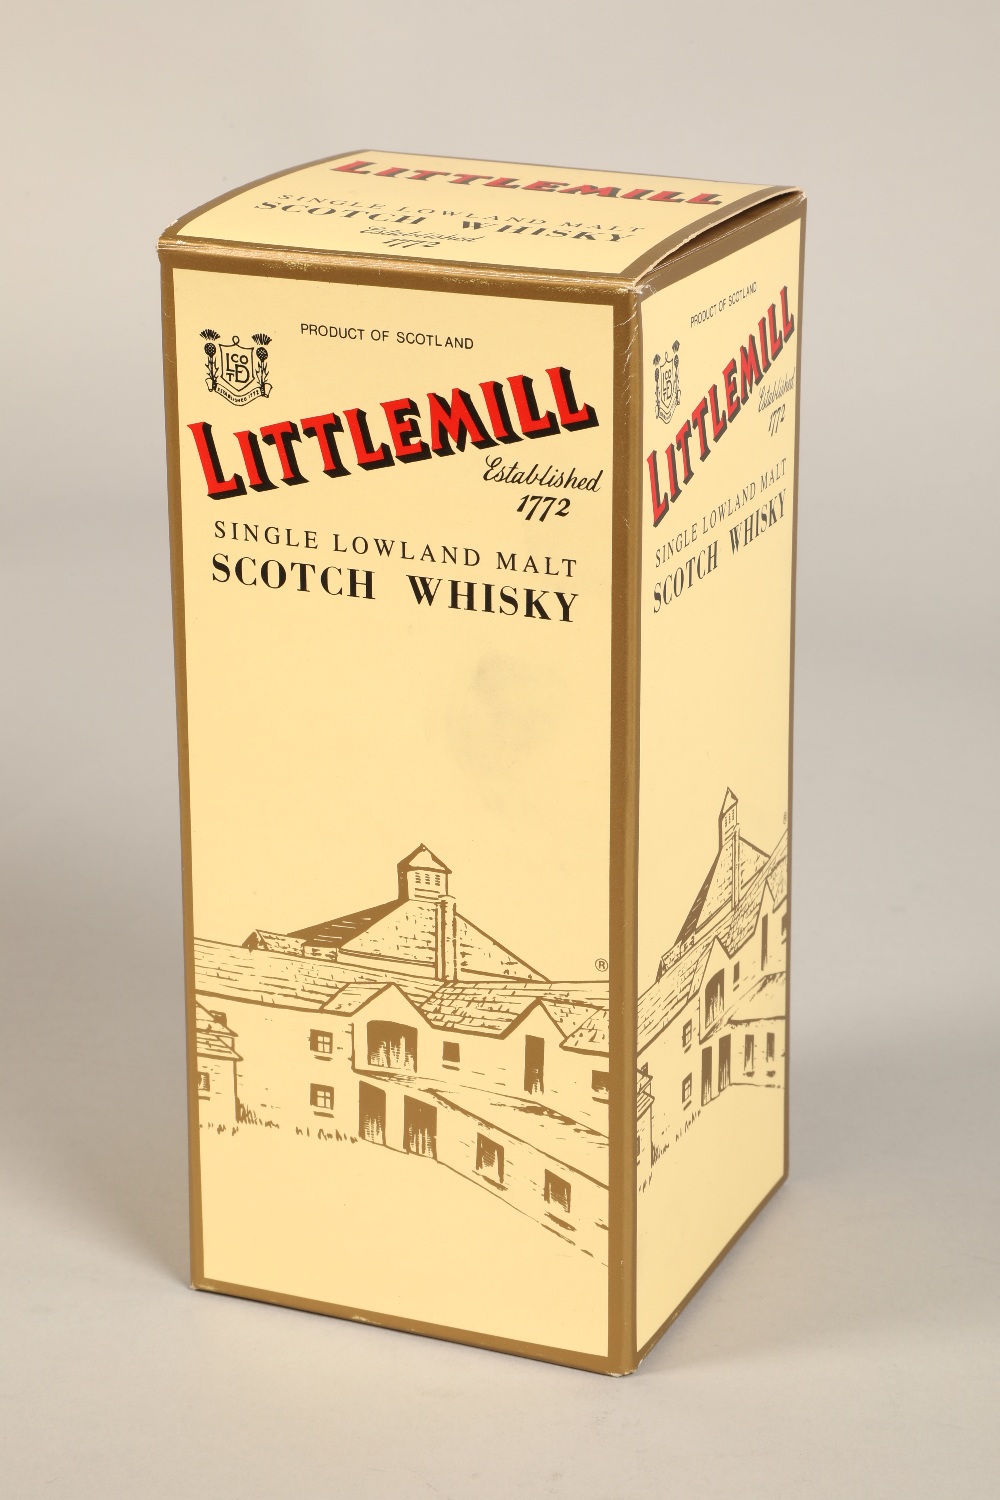 Littlemill, single lowland malt Scotch whisky,  with carton ,70 cl, 40% vol - Image 6 of 7